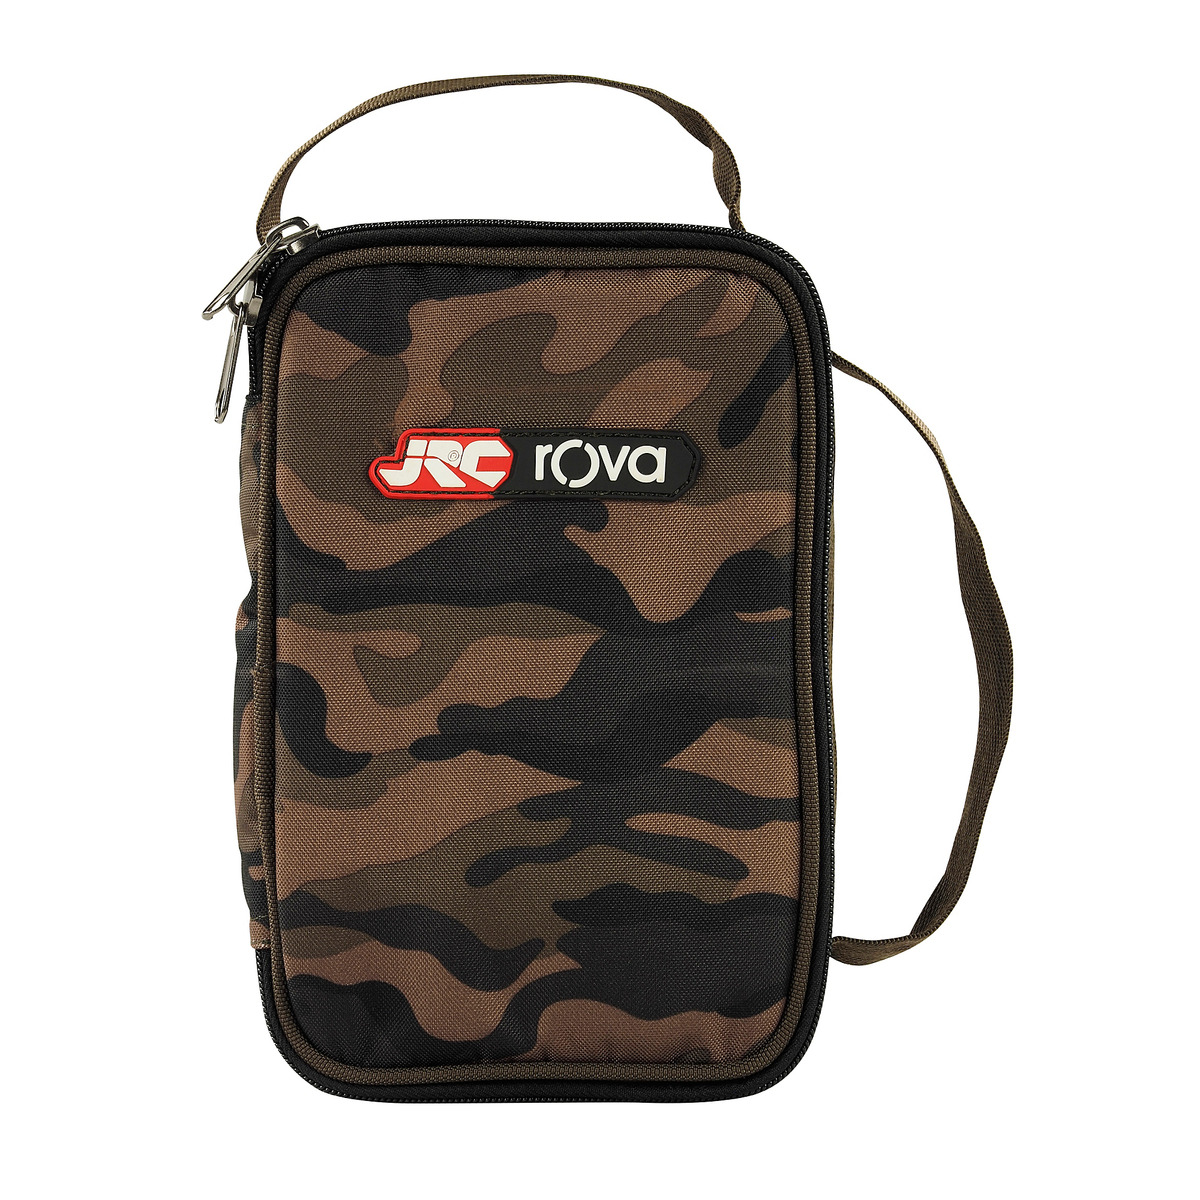 Jrc Rova  Accessory Bag Small - Medium